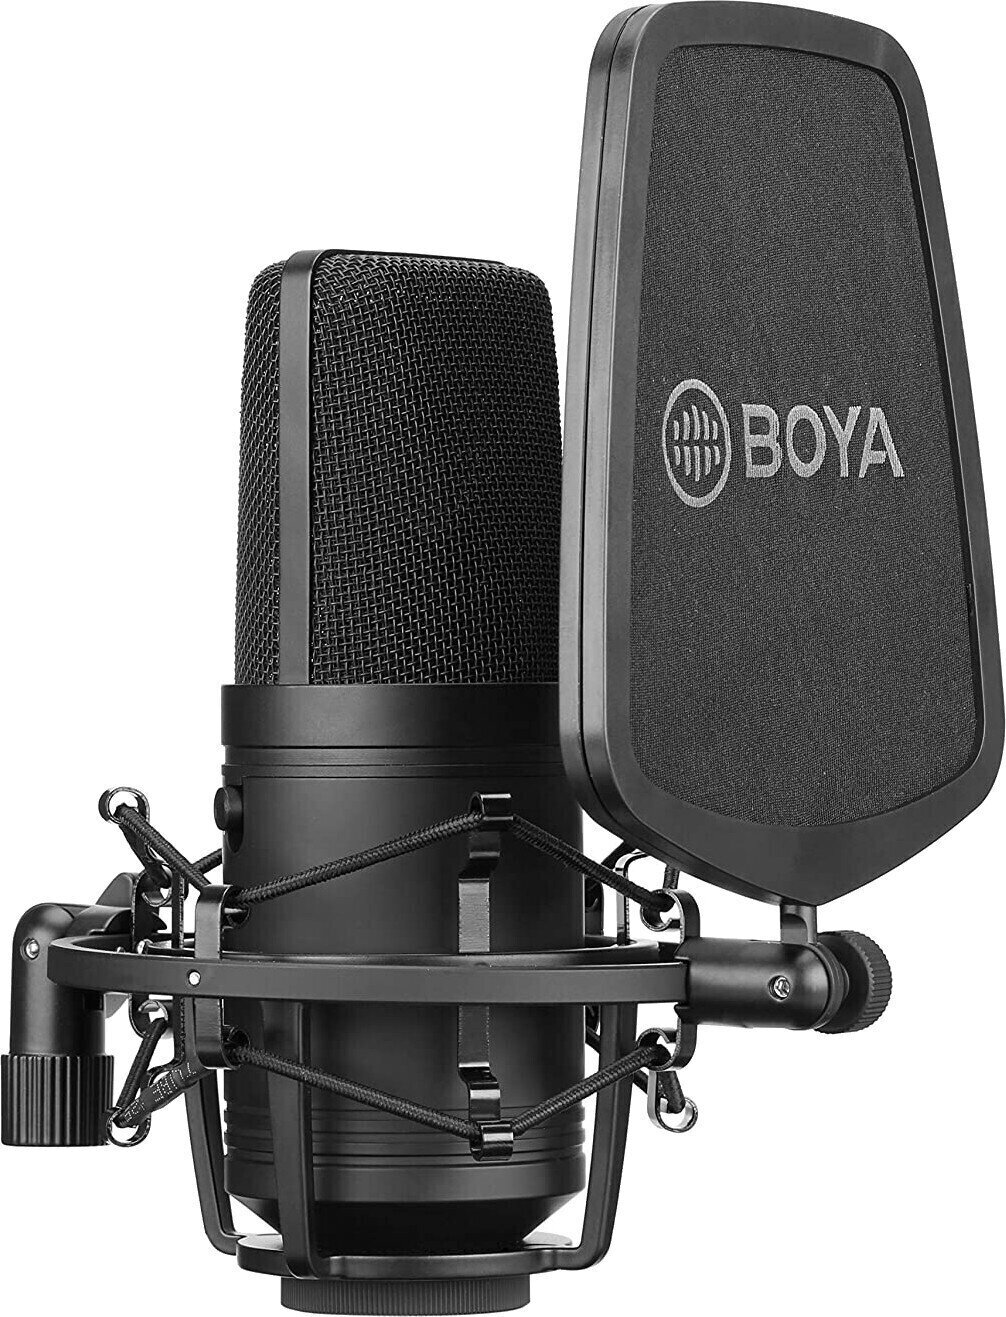 Kondenzatorski studijski mikrofon BOYA BY-M800 Kondenzatorski studijski mikrofon